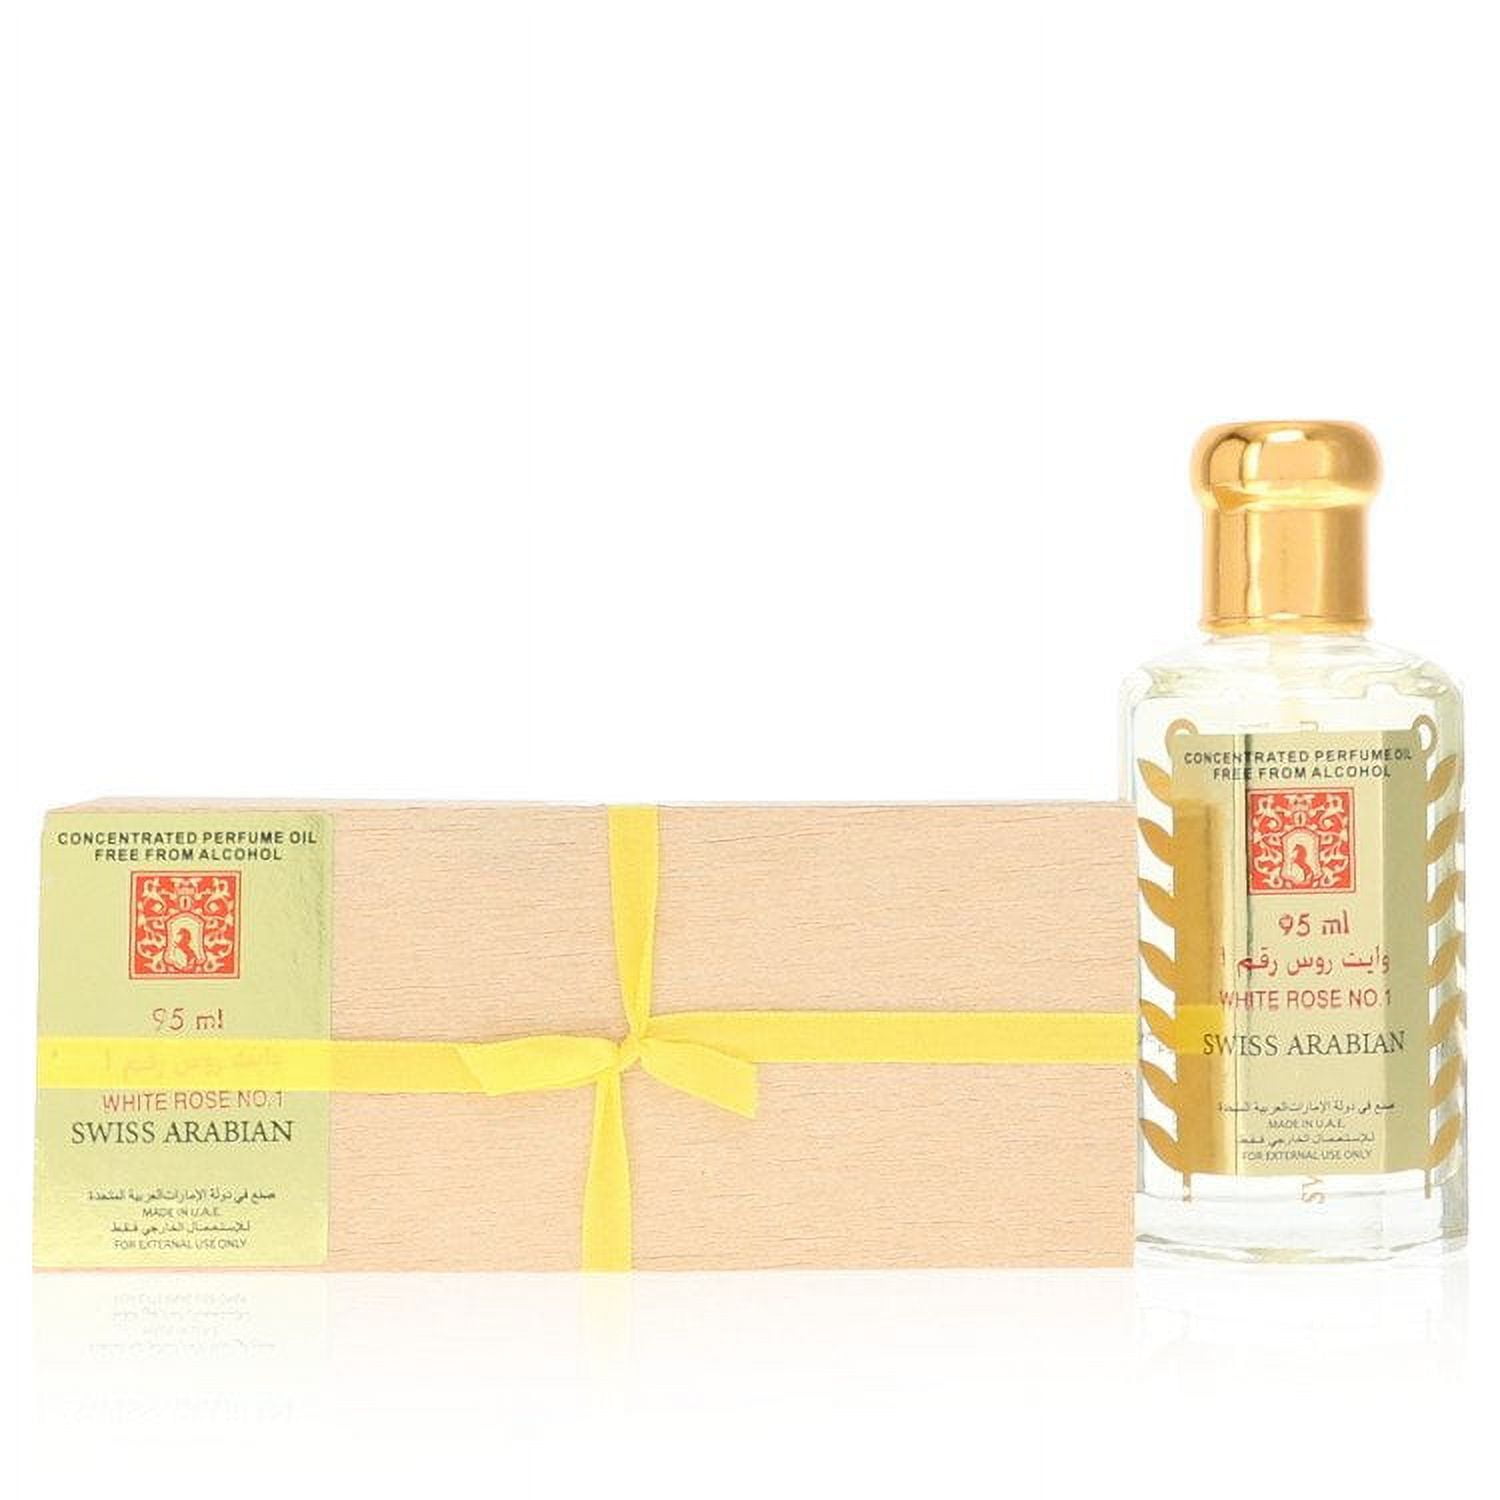 Yulali by Swiss Arabian for Women - 0.5 oz Parfum Oil 